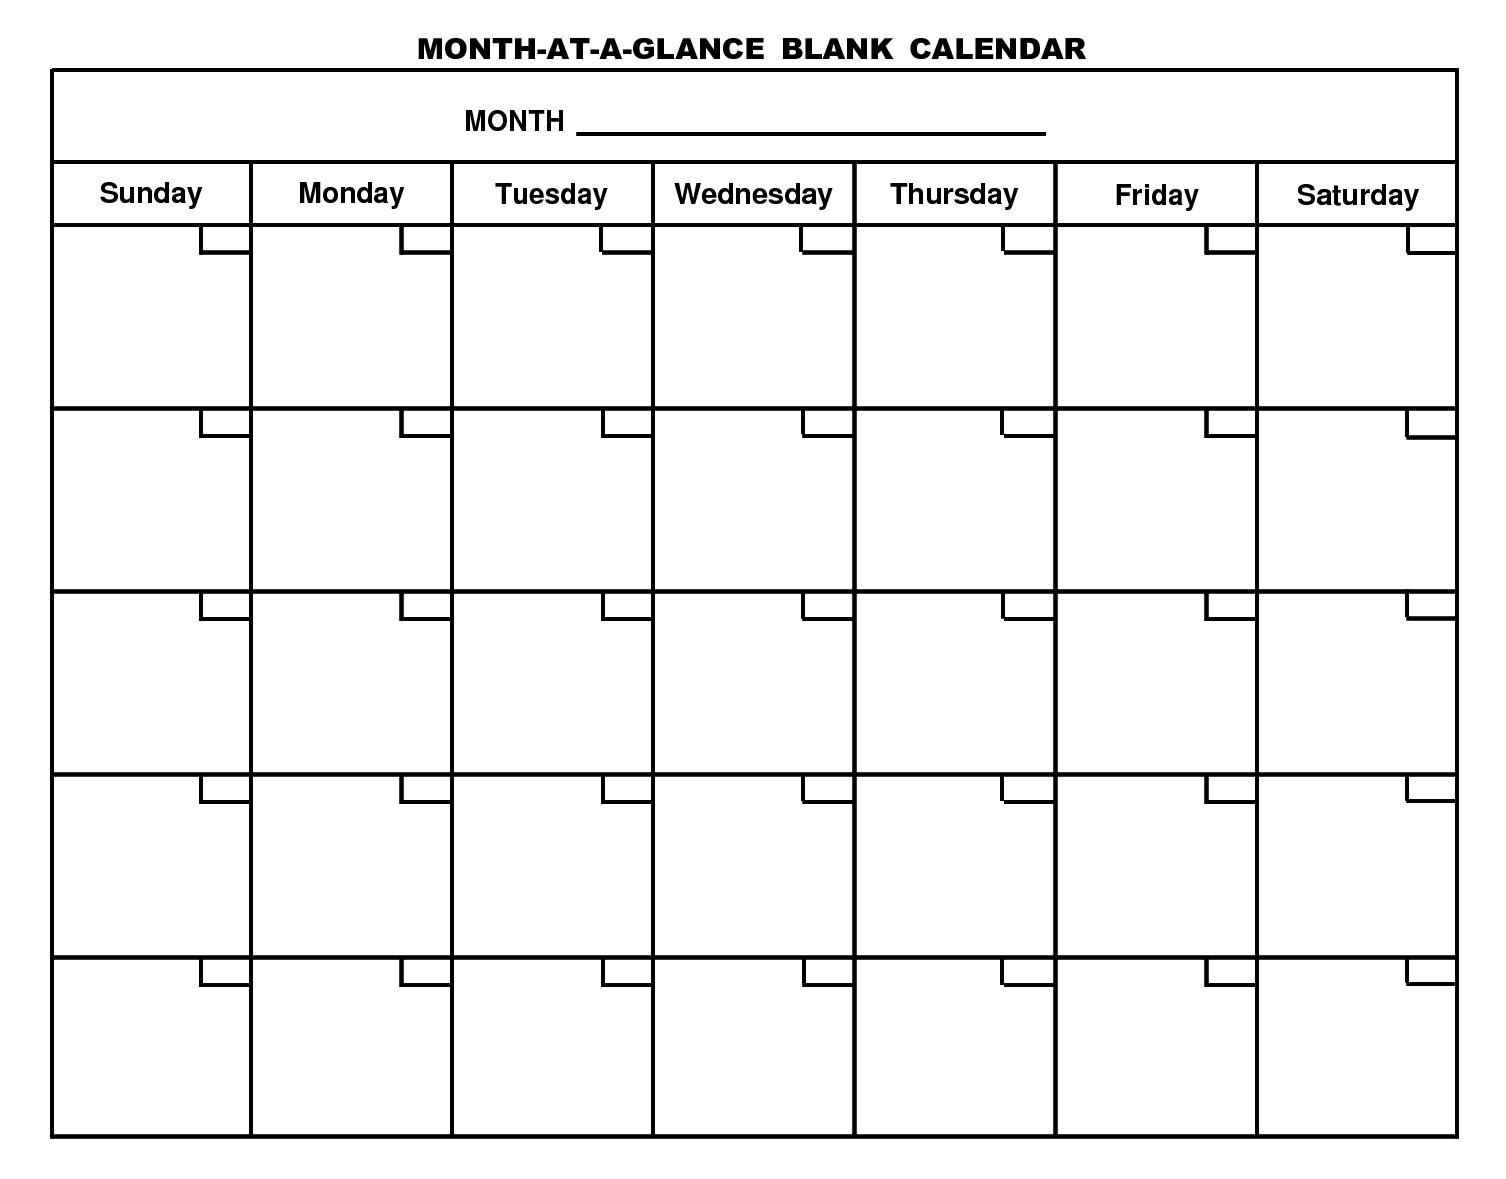 Calendar Template No Dates | Igotlockedout